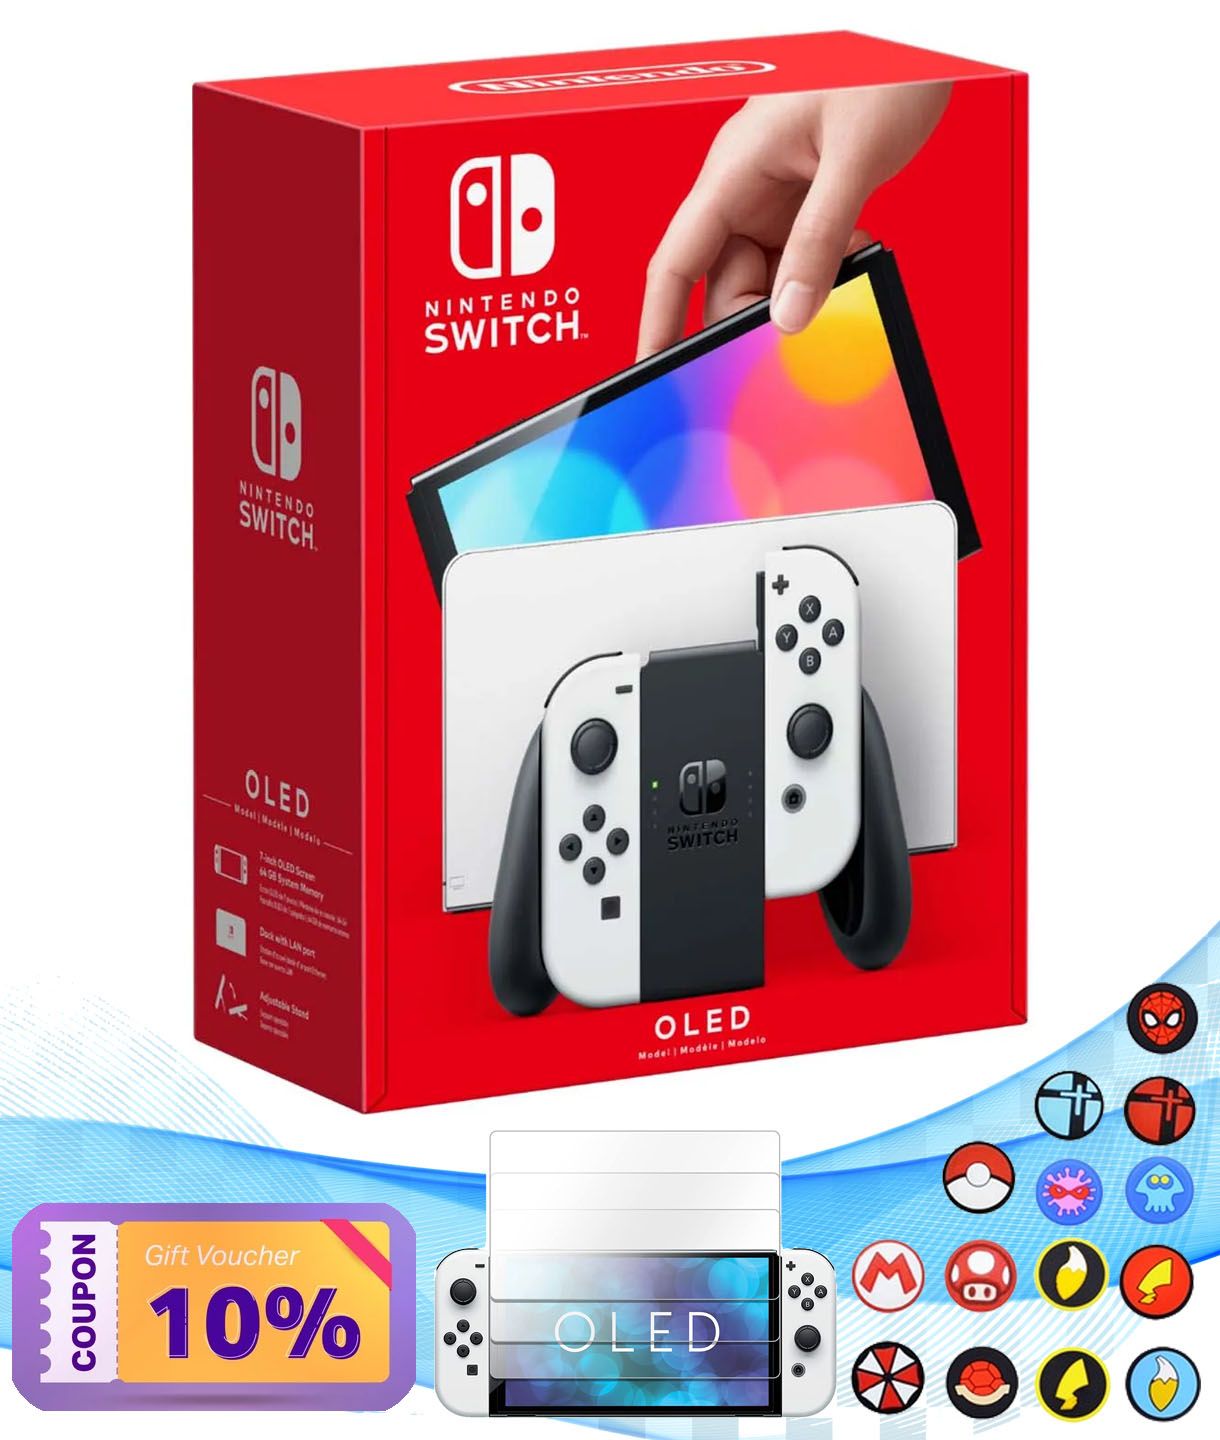 Máy Nintendo Switch White Joycon Kèm Quà Tặng